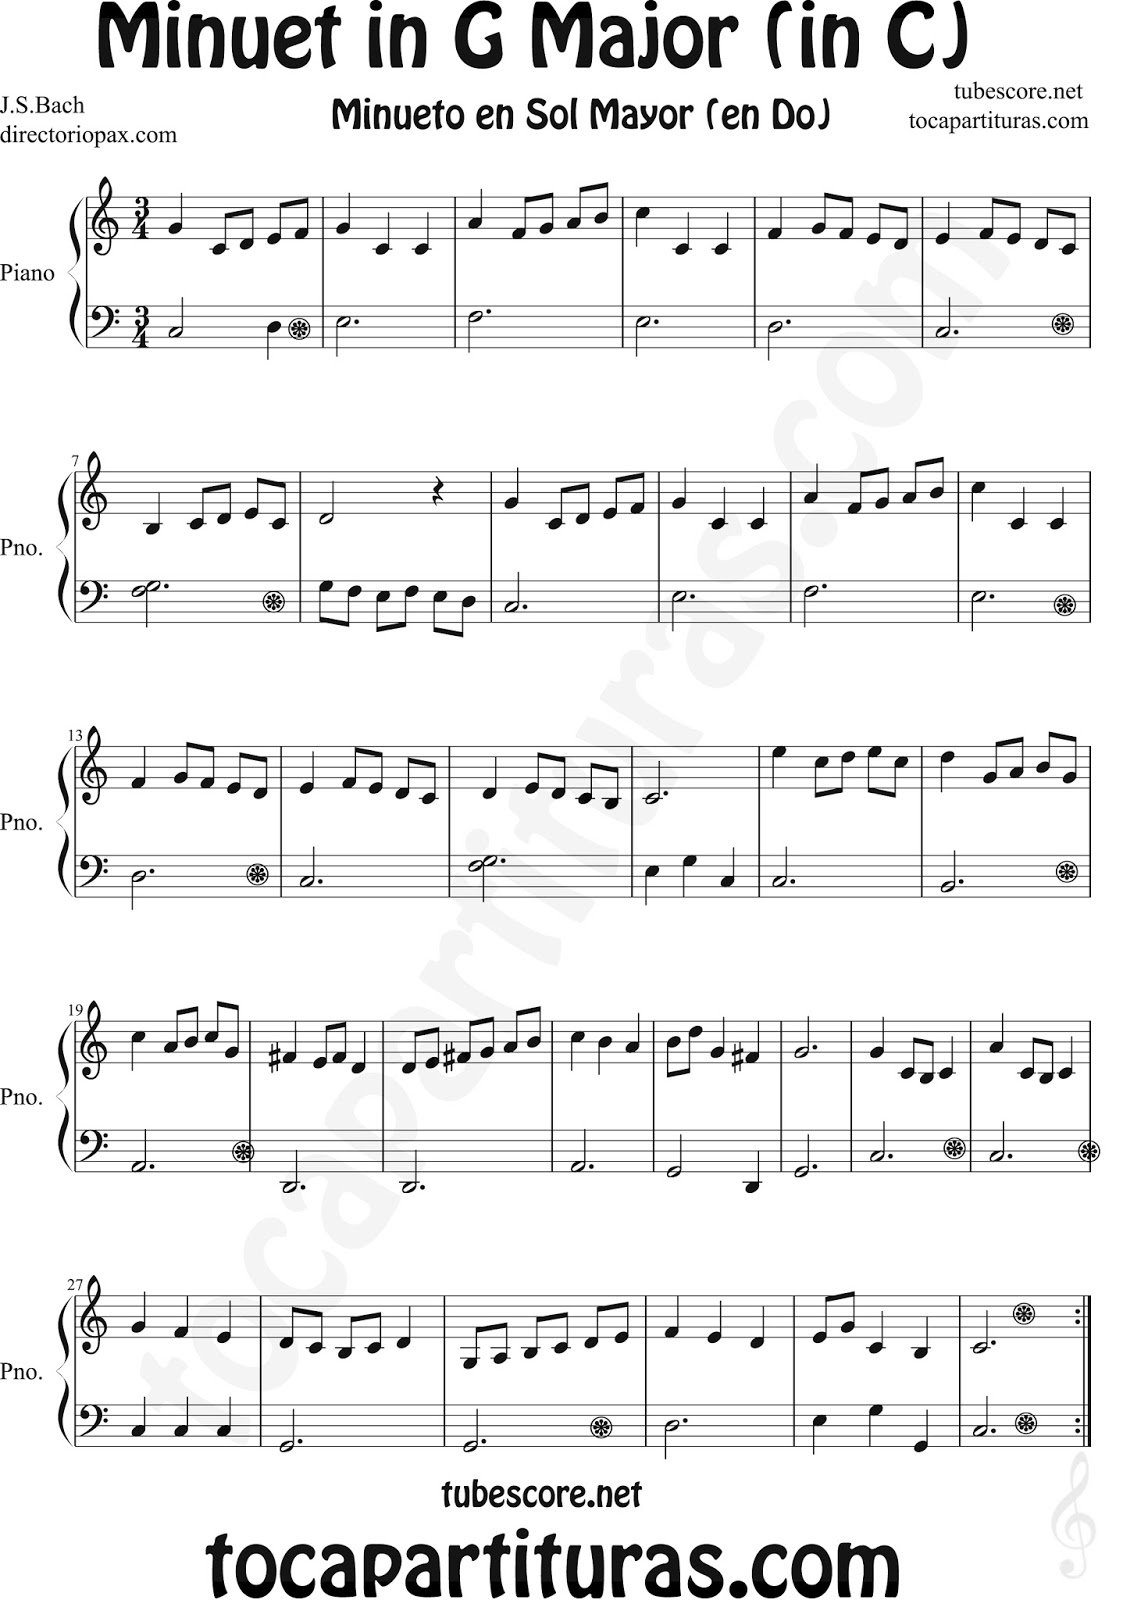 diegosax: Minueto de en Do Mayor (original Sol M BWV Anh. 114) Partitura Fácil de Piano, Flauta, Saxofón Alto, Trompeta, Viola, Piano, Oboe, Clarinete, Saxo Tenor, Sax, Trombón,